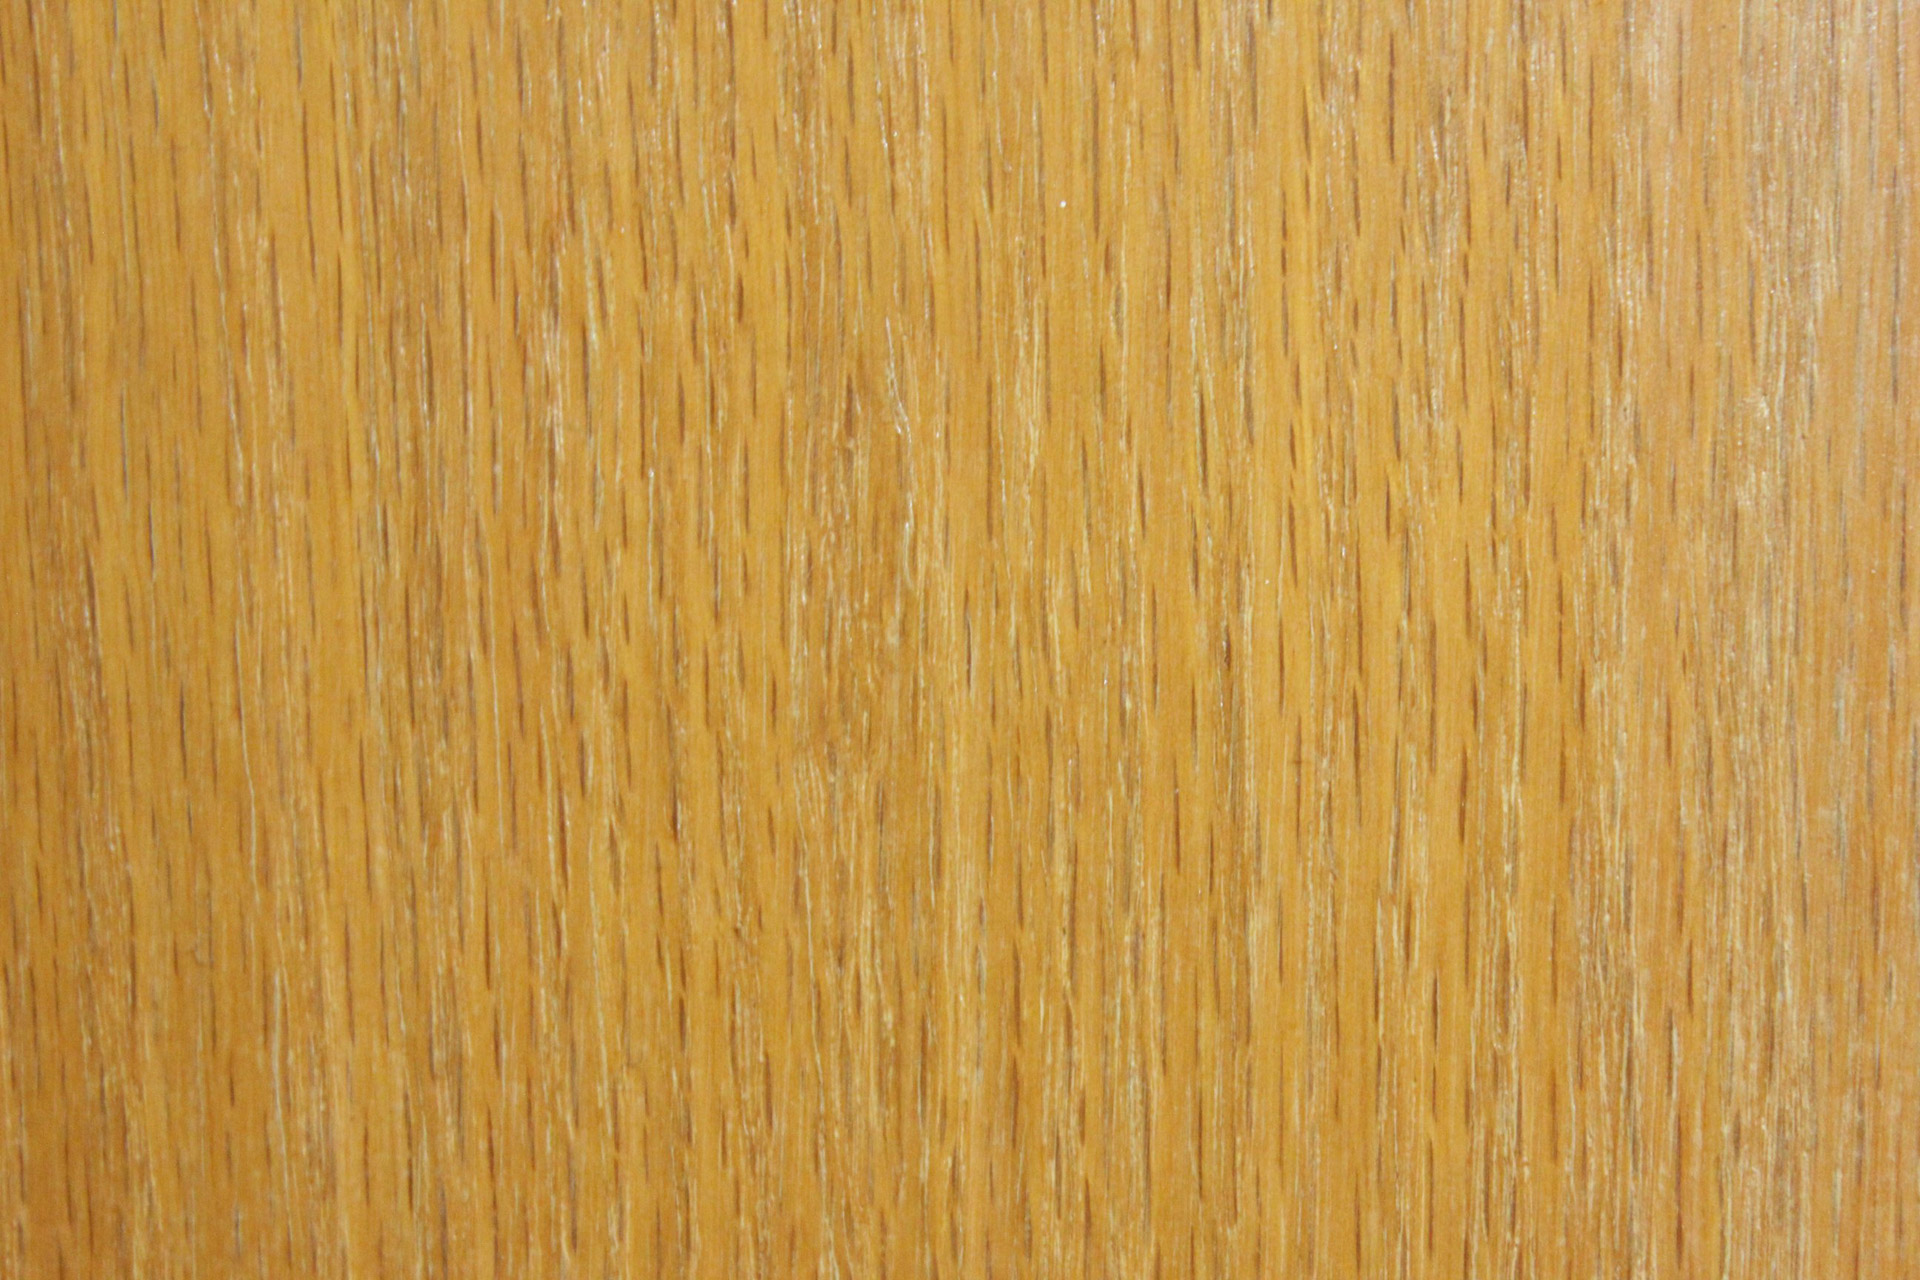 Pattern Wood Texture